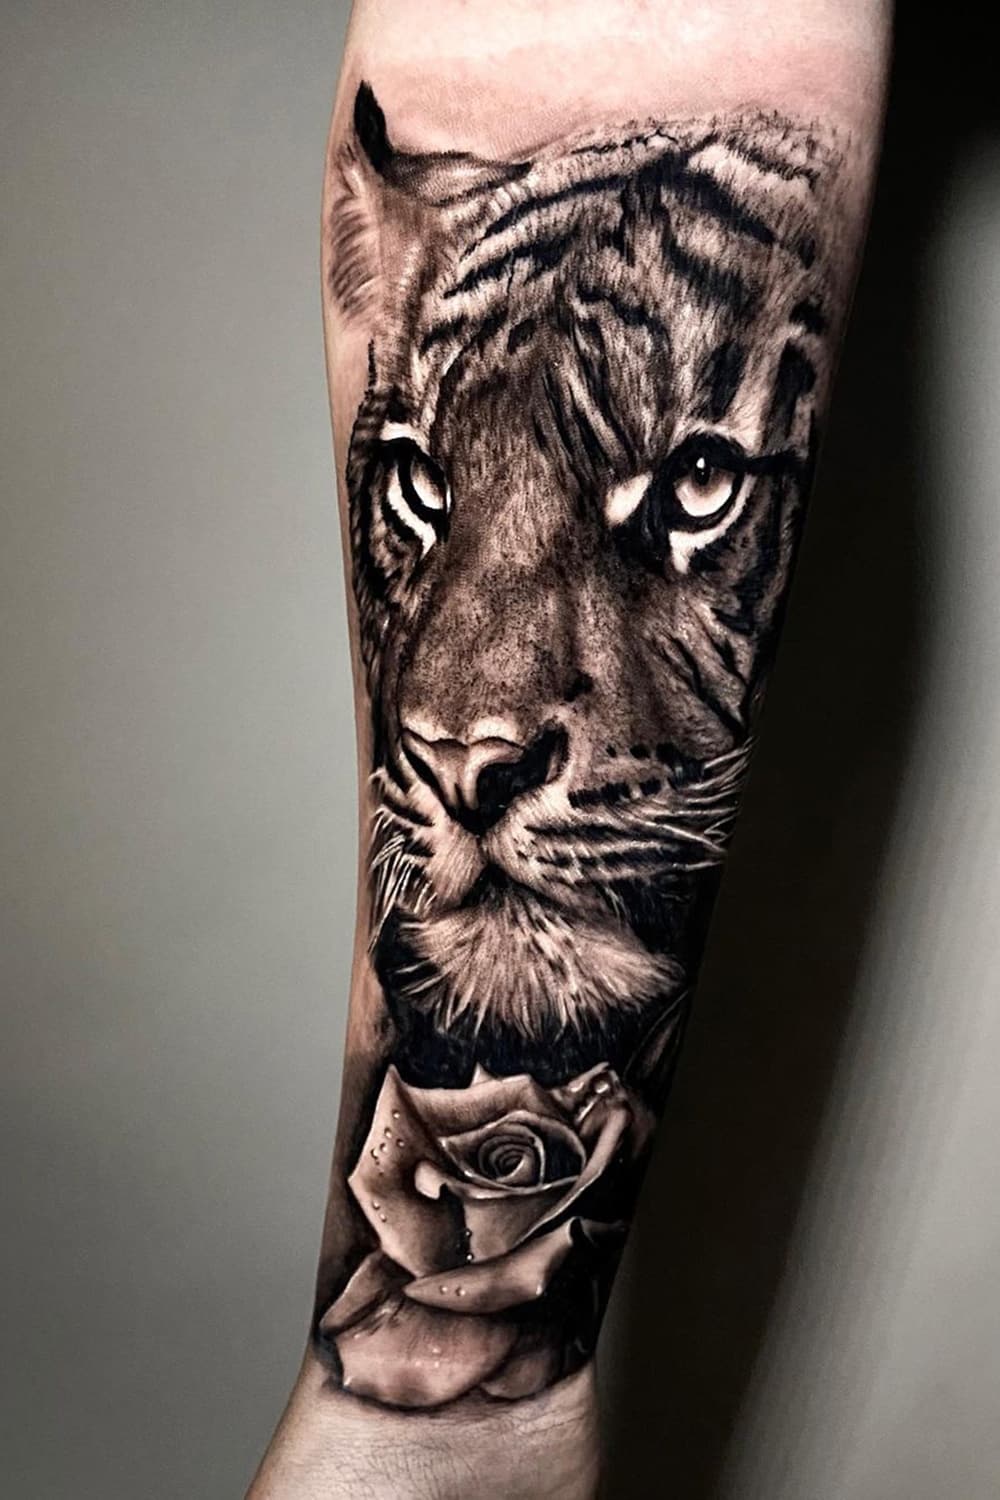 Tiger Rose Tattoo